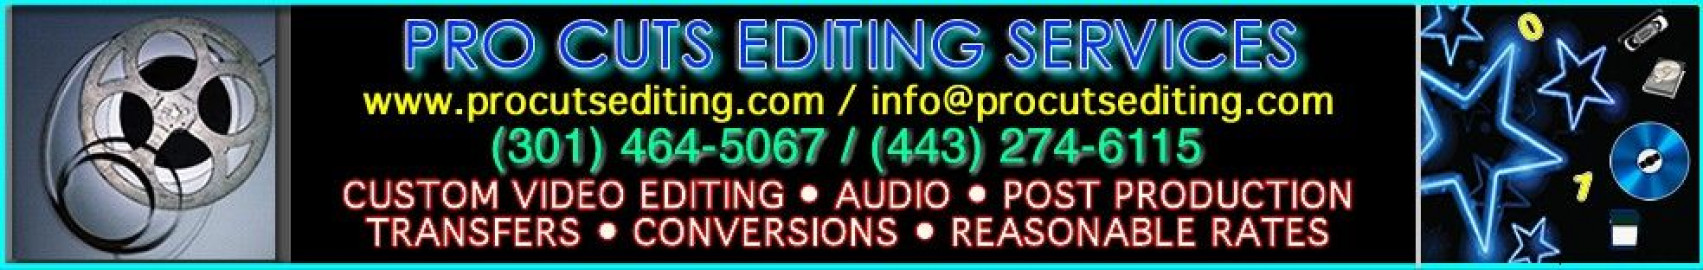 Visit Pro Cuts Editing Services